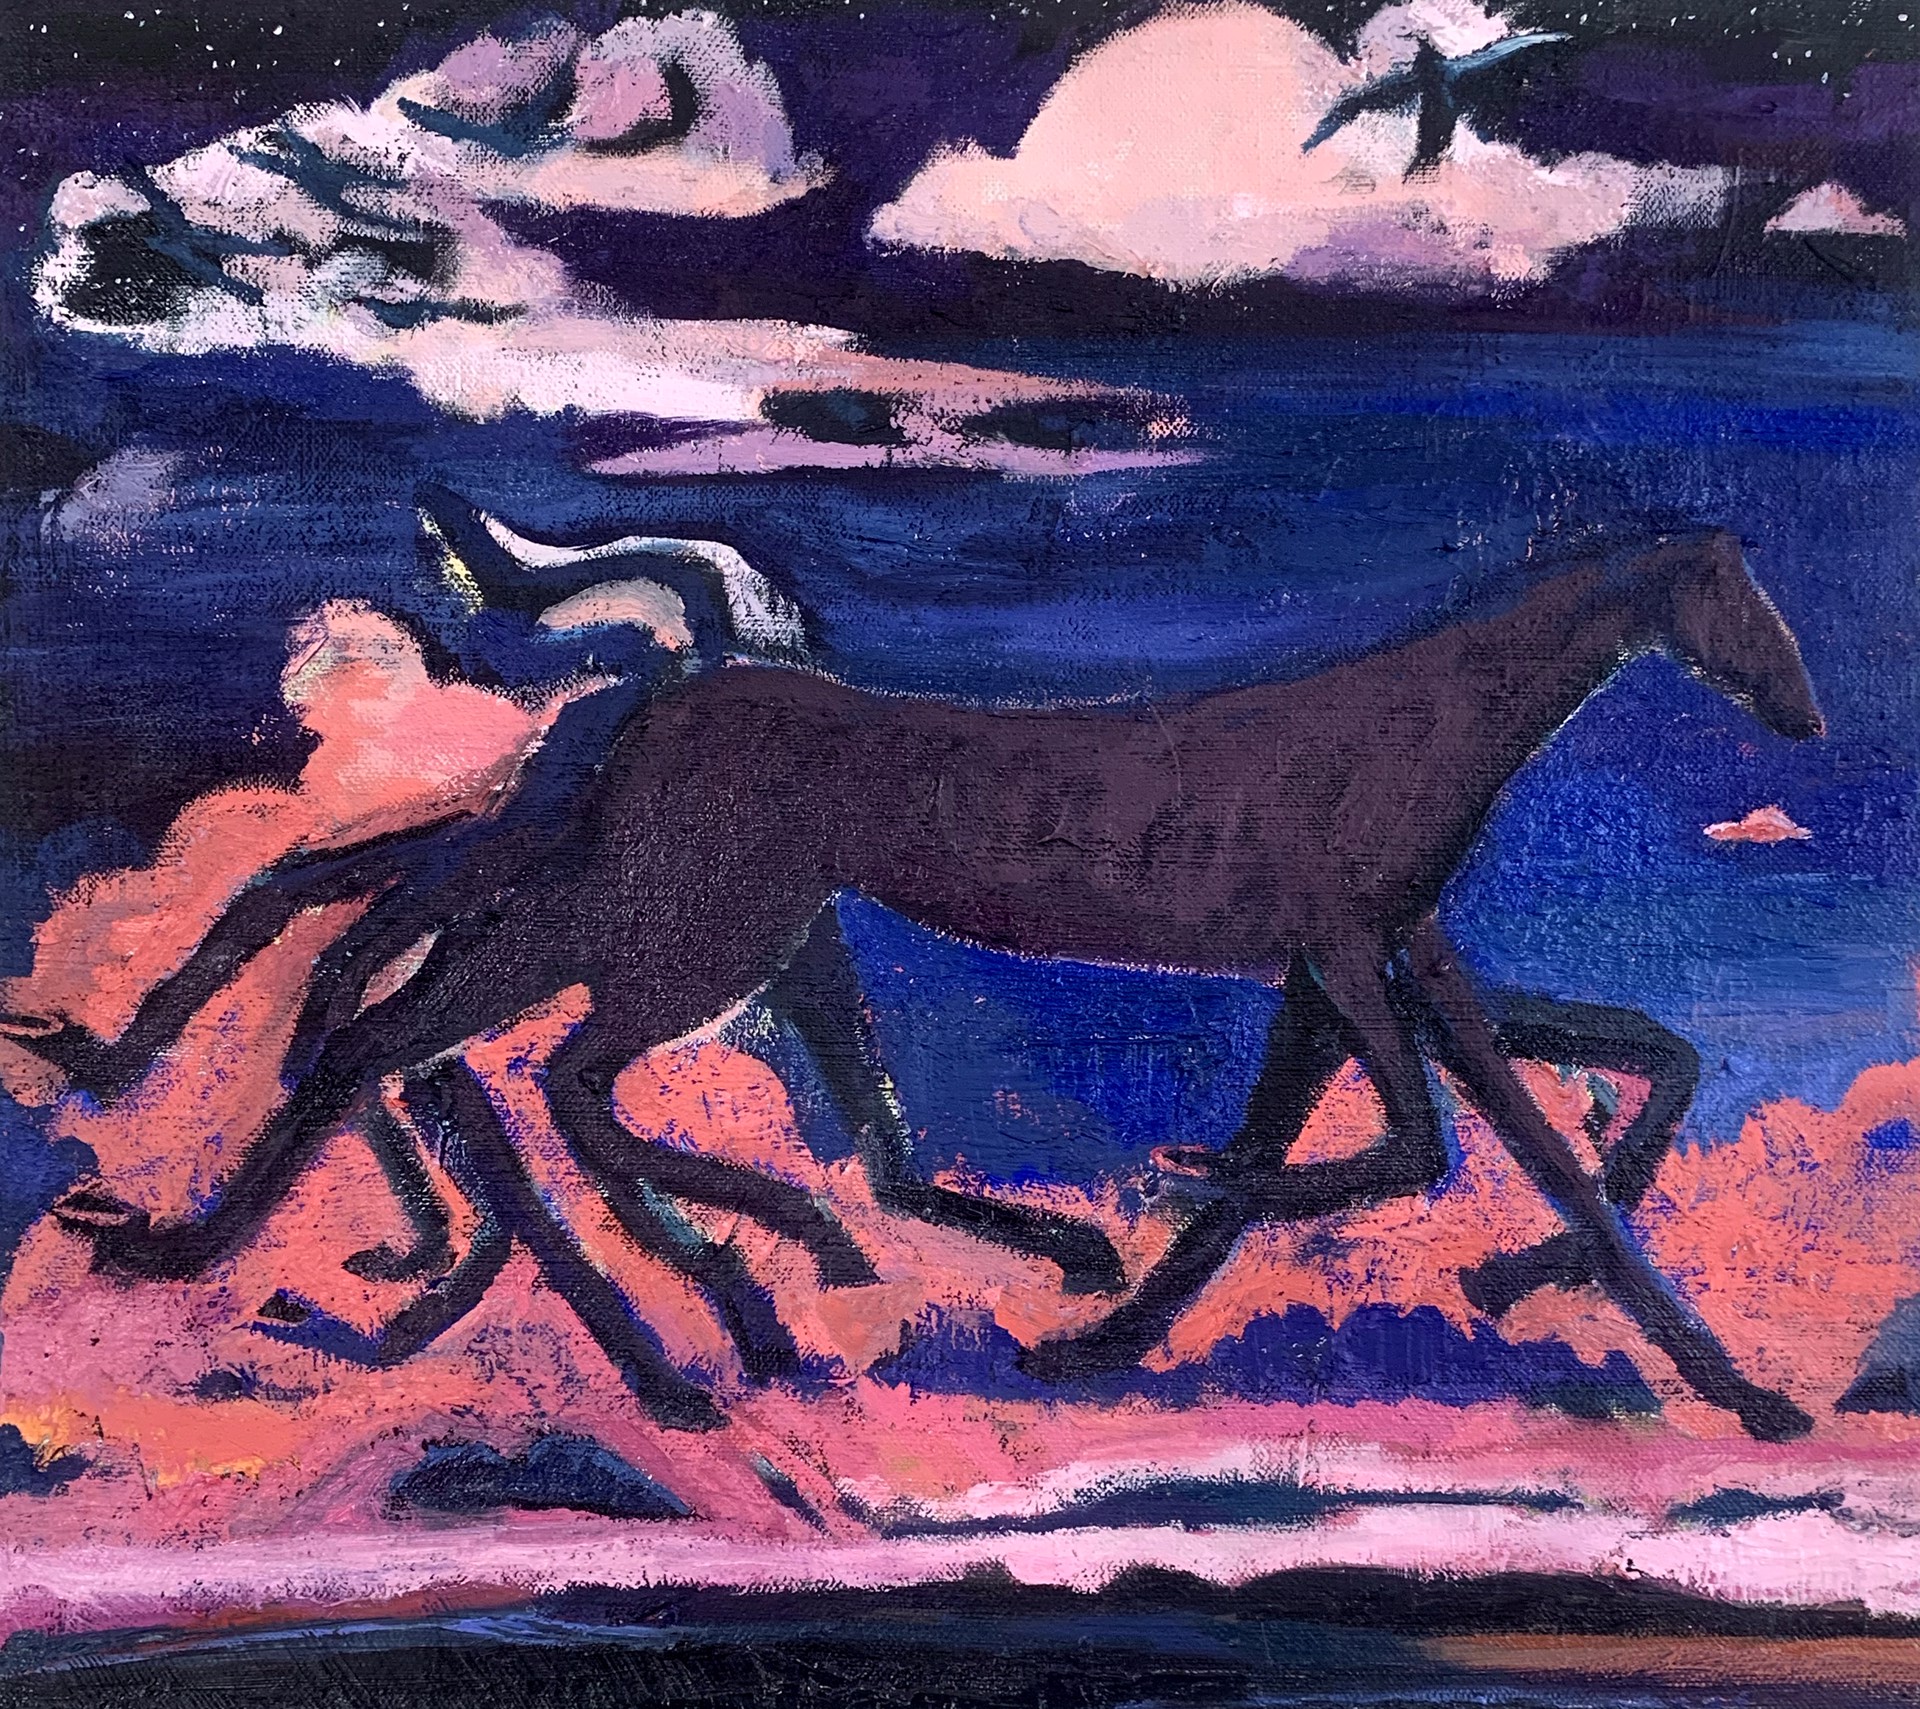 Gallop by Sirena LaBurn